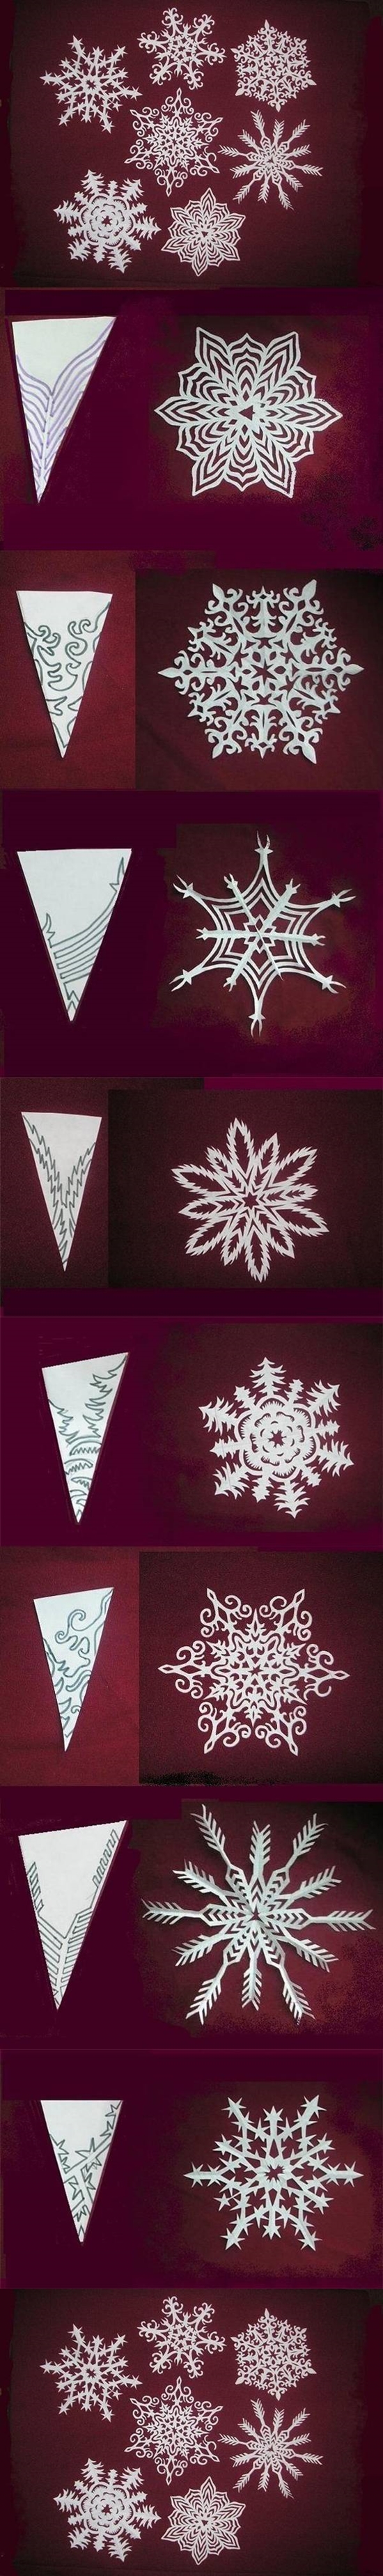 paper Snowflakes pattern Beautiful Paper Snowflake Designs to DIY (Snowflakes Pattern)